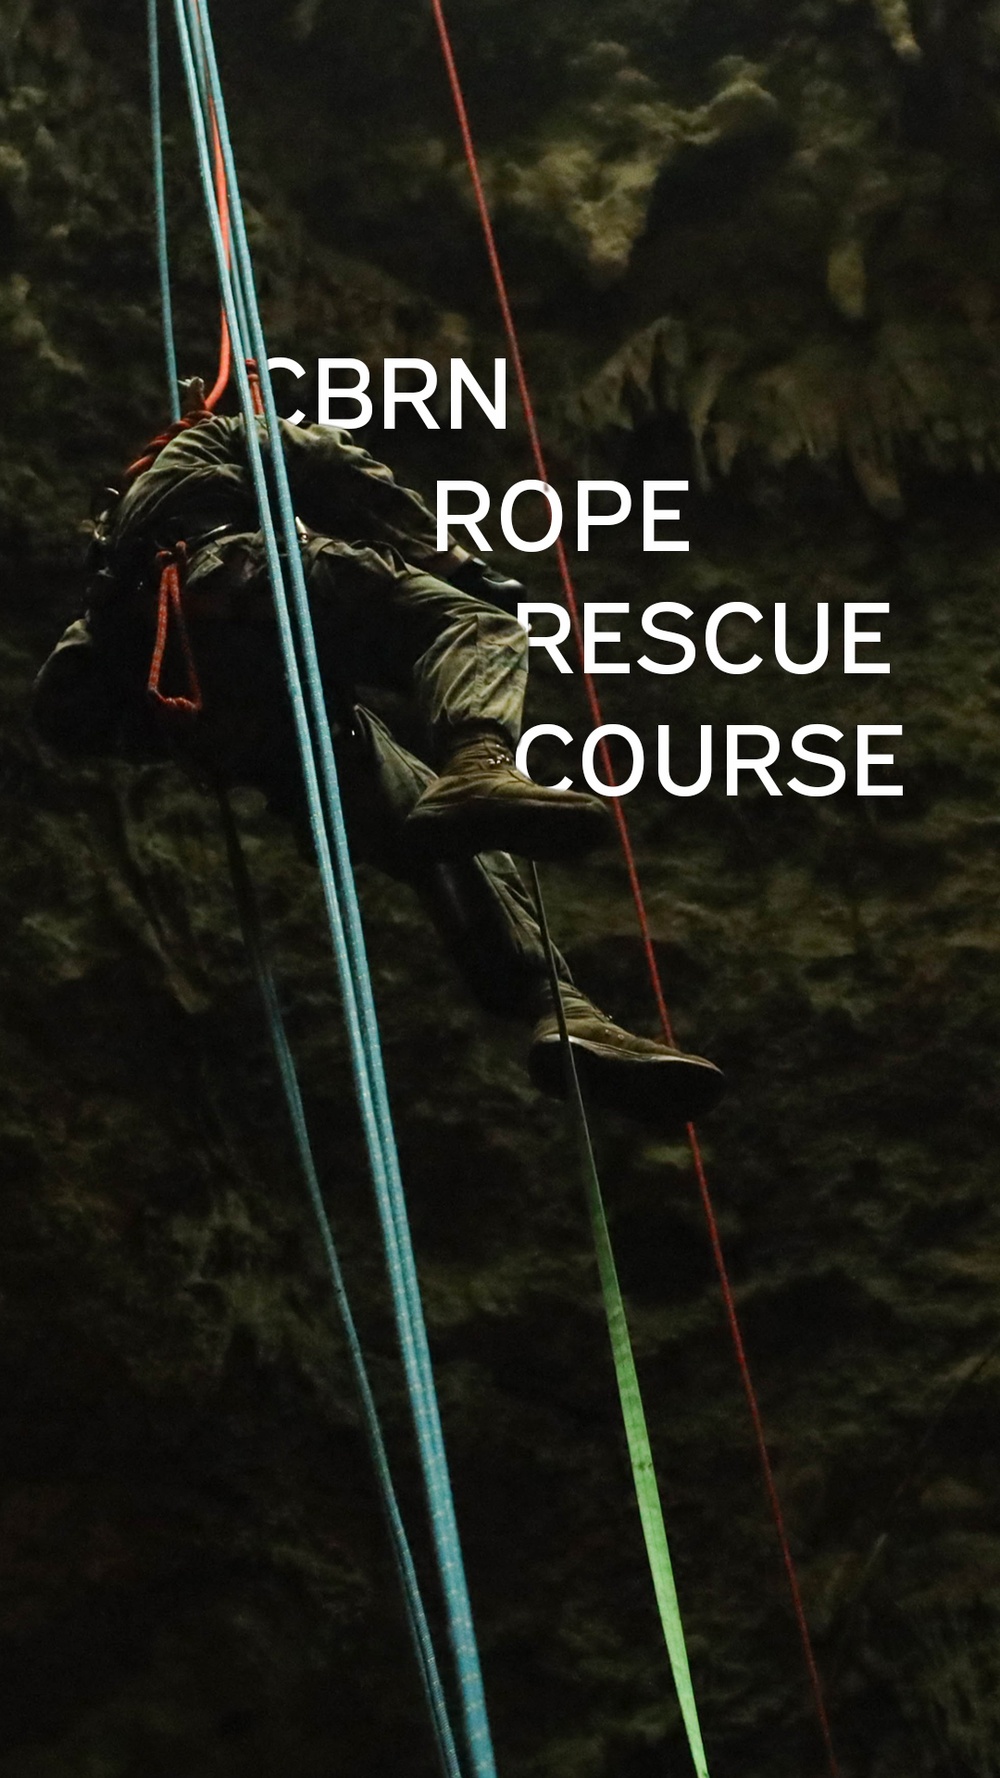 CBRN Rope Rescue Course